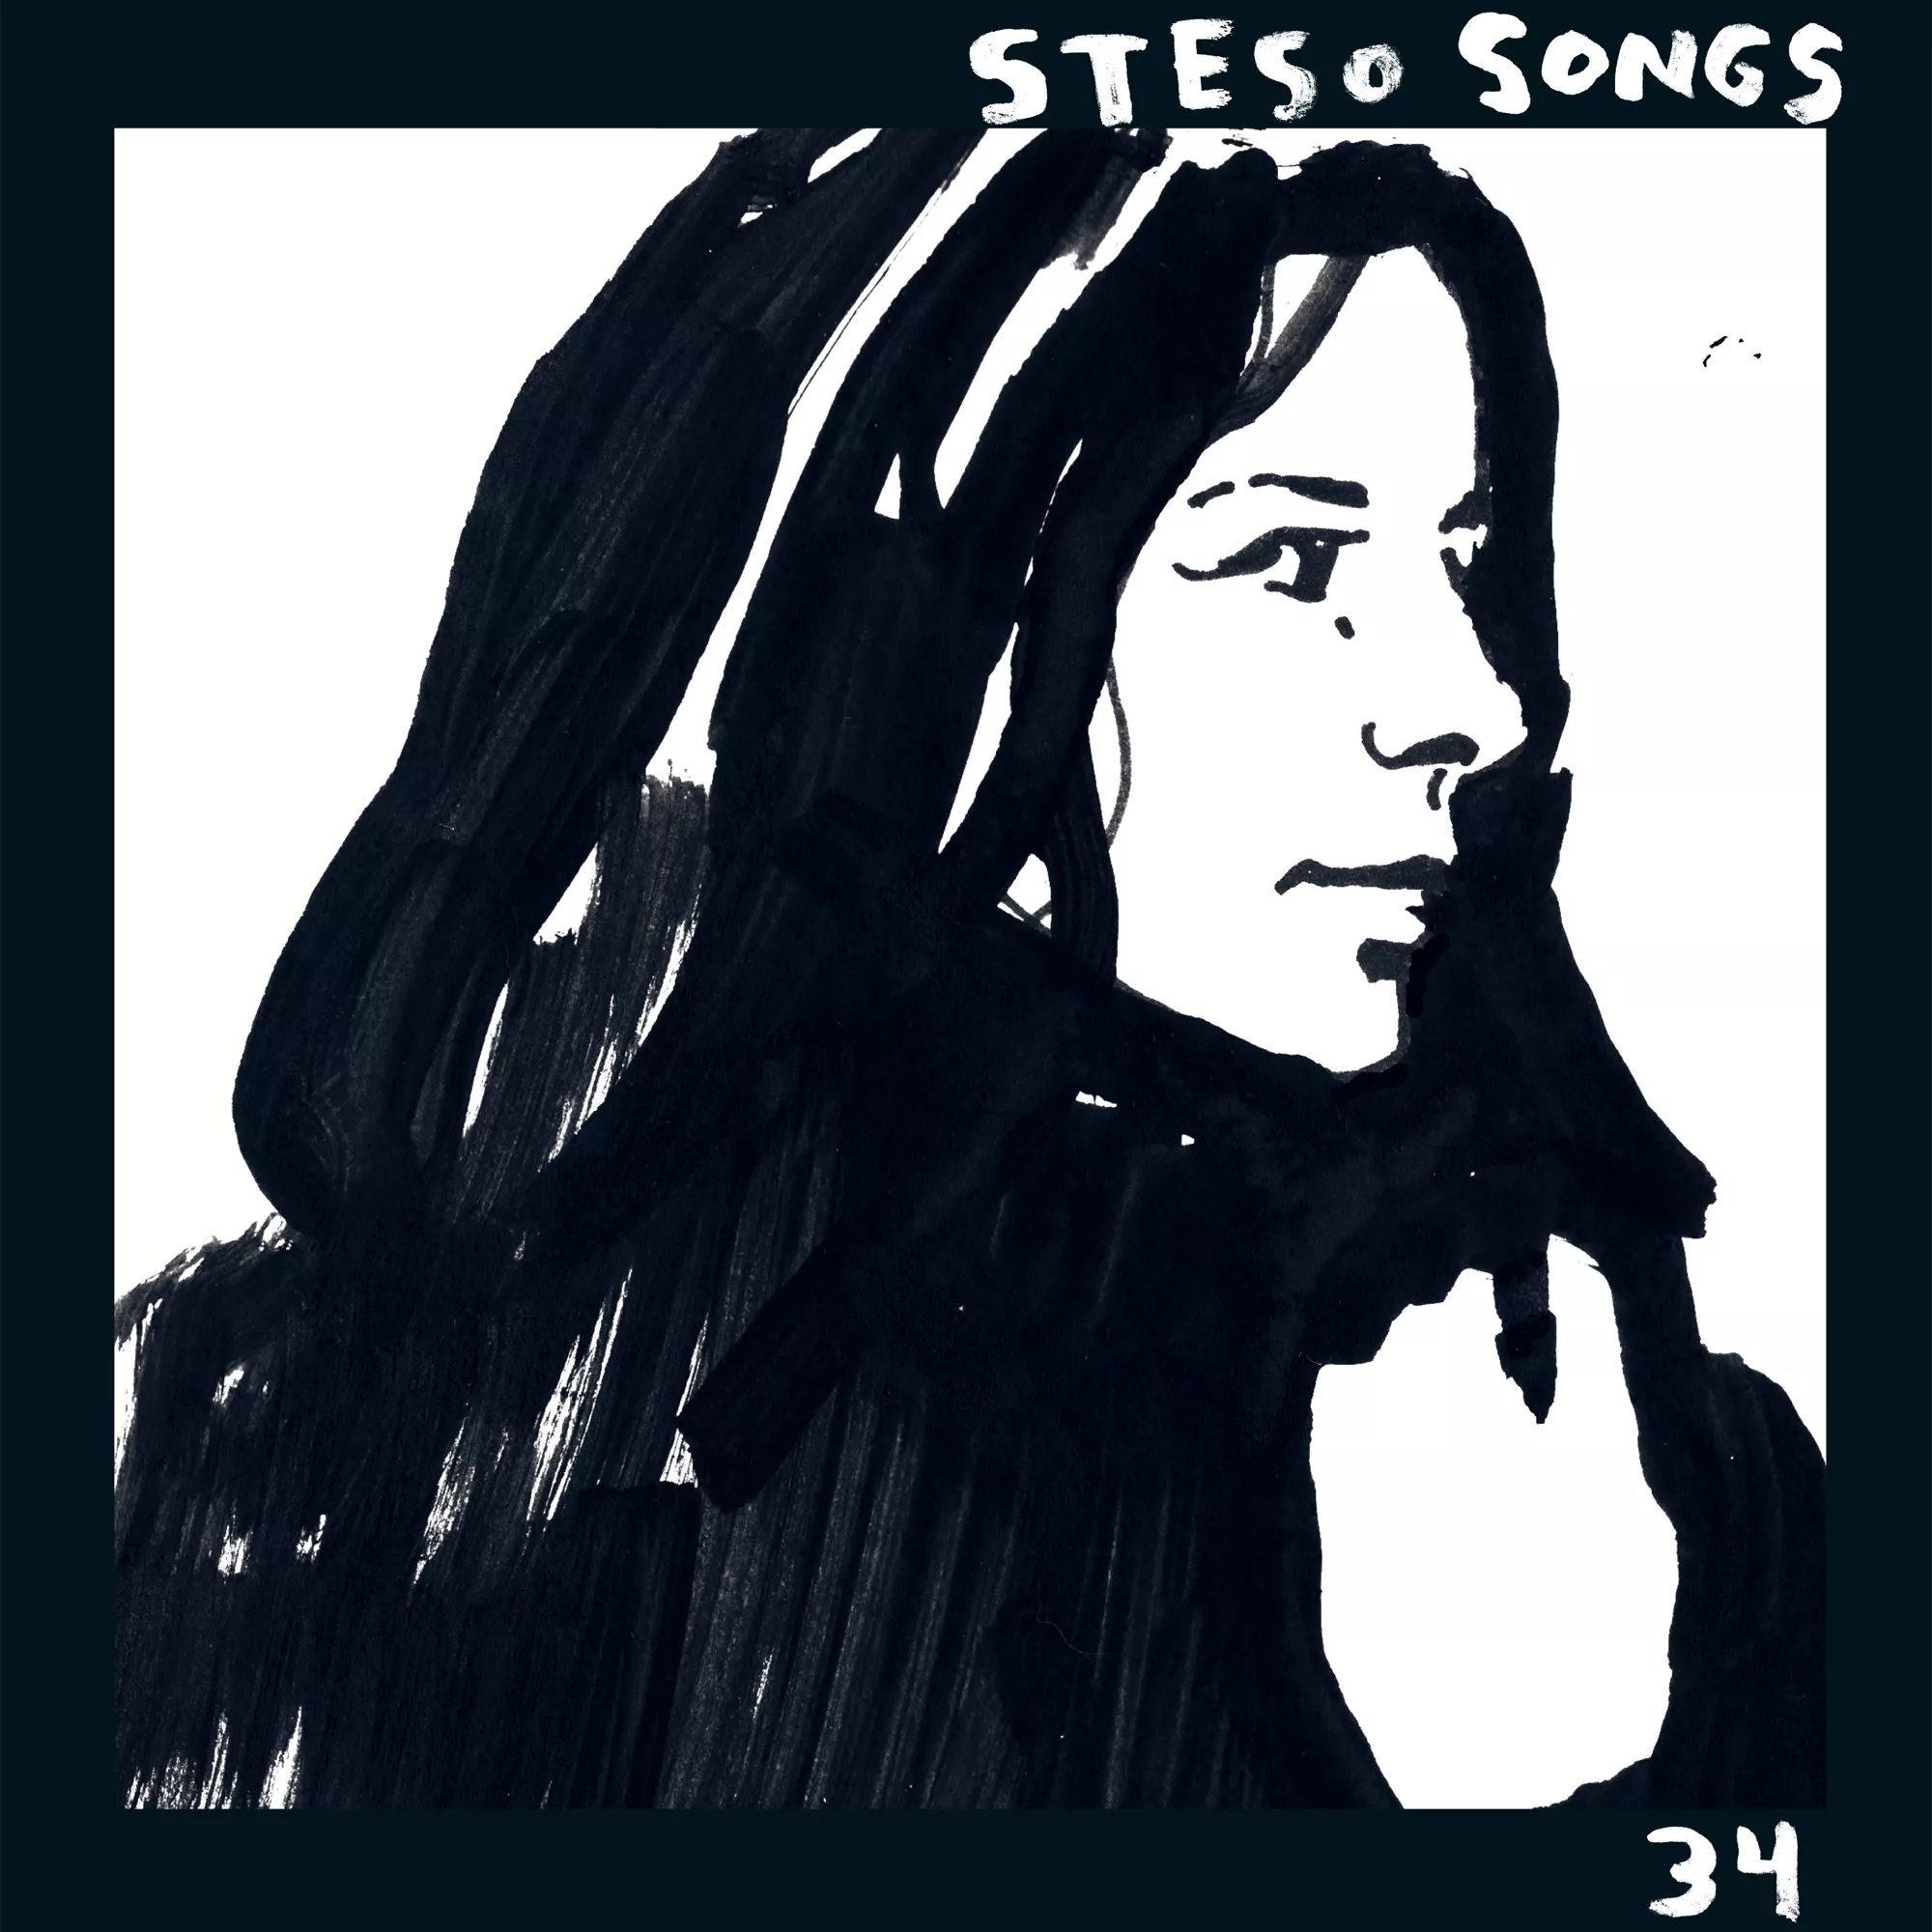 34 - Steso Songs